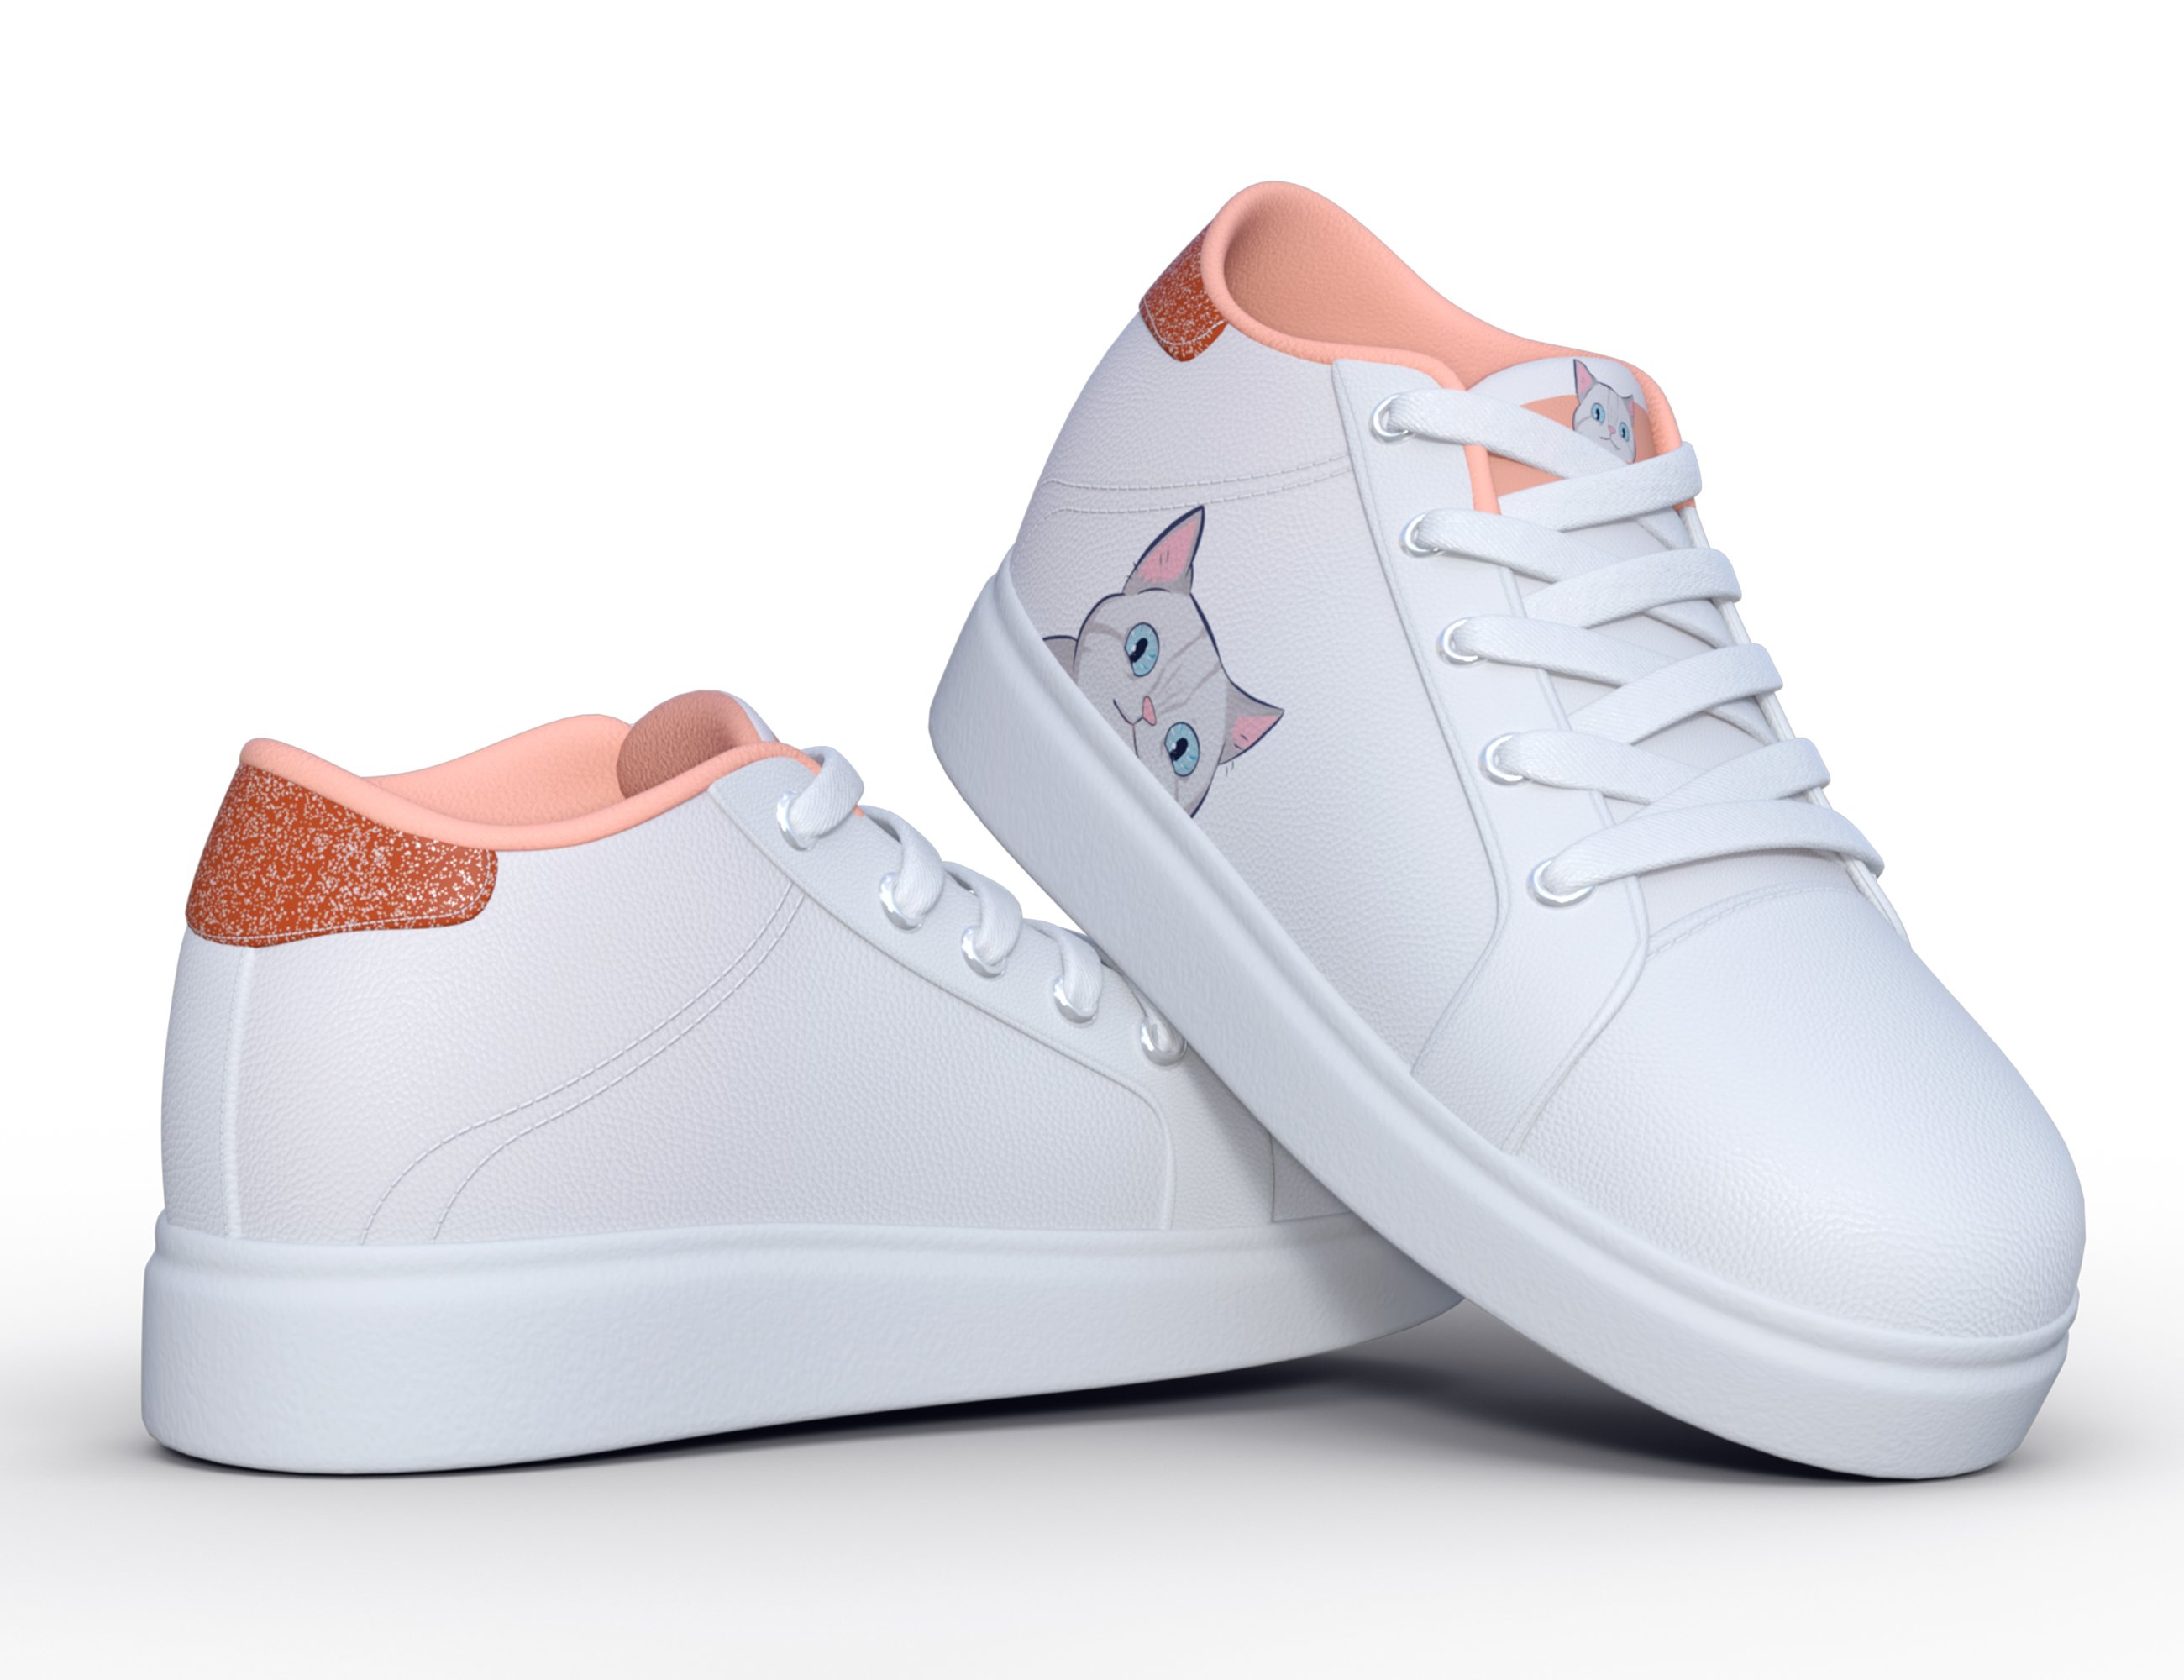 SU Cute Sneakers for Genesis 8 and 8.1 Females by: Sue Yee, 3D Models by Daz 3D